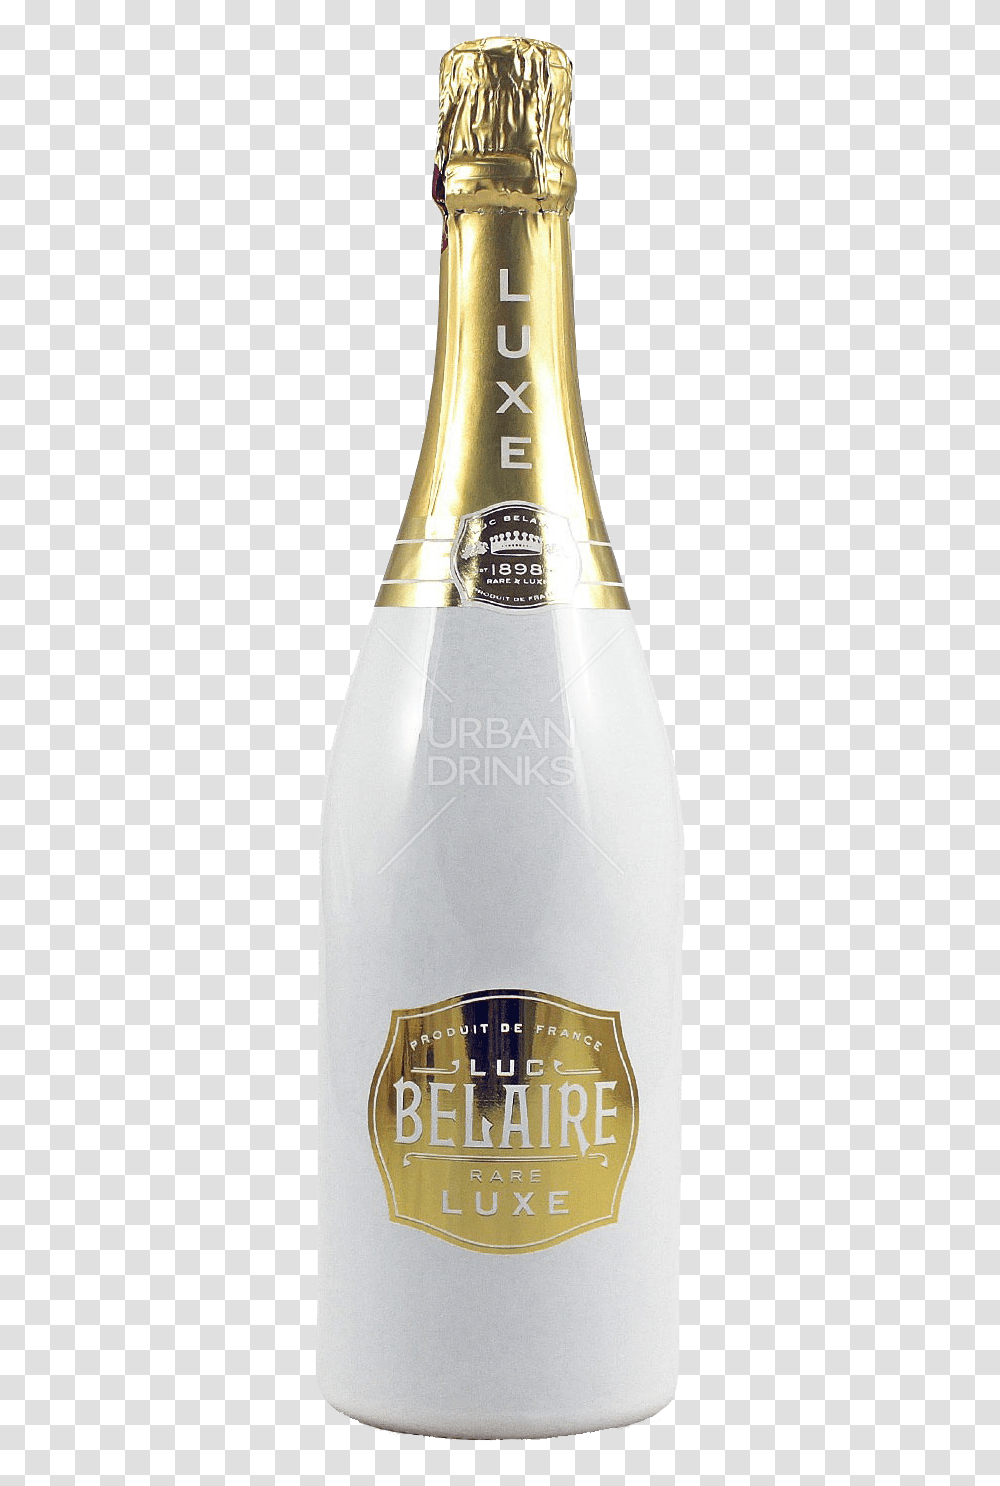 Luc Belaire Brut Luxe 75cl Belaire Rose White Bottle, Beverage, Drink, Alcohol, Sake Transparent Png